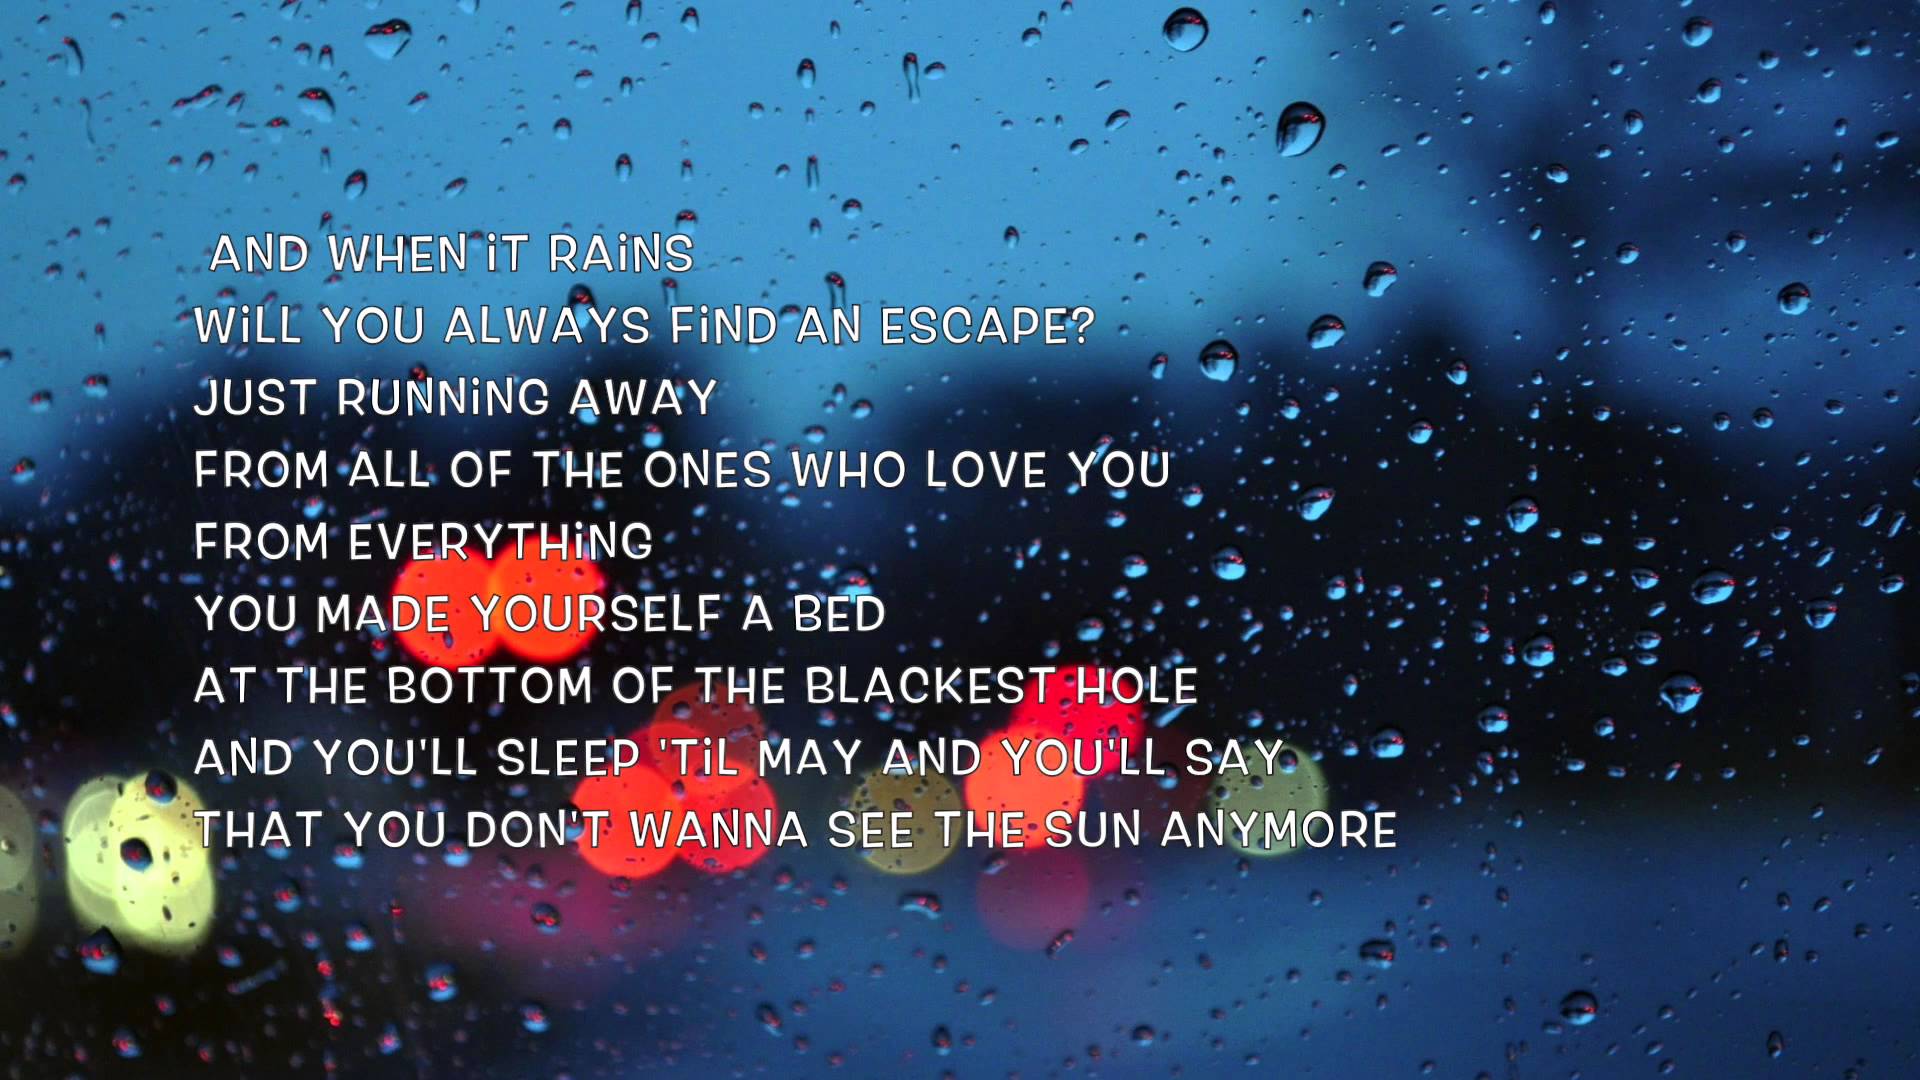 Paramore - When It Rains Lyrics - YouTube